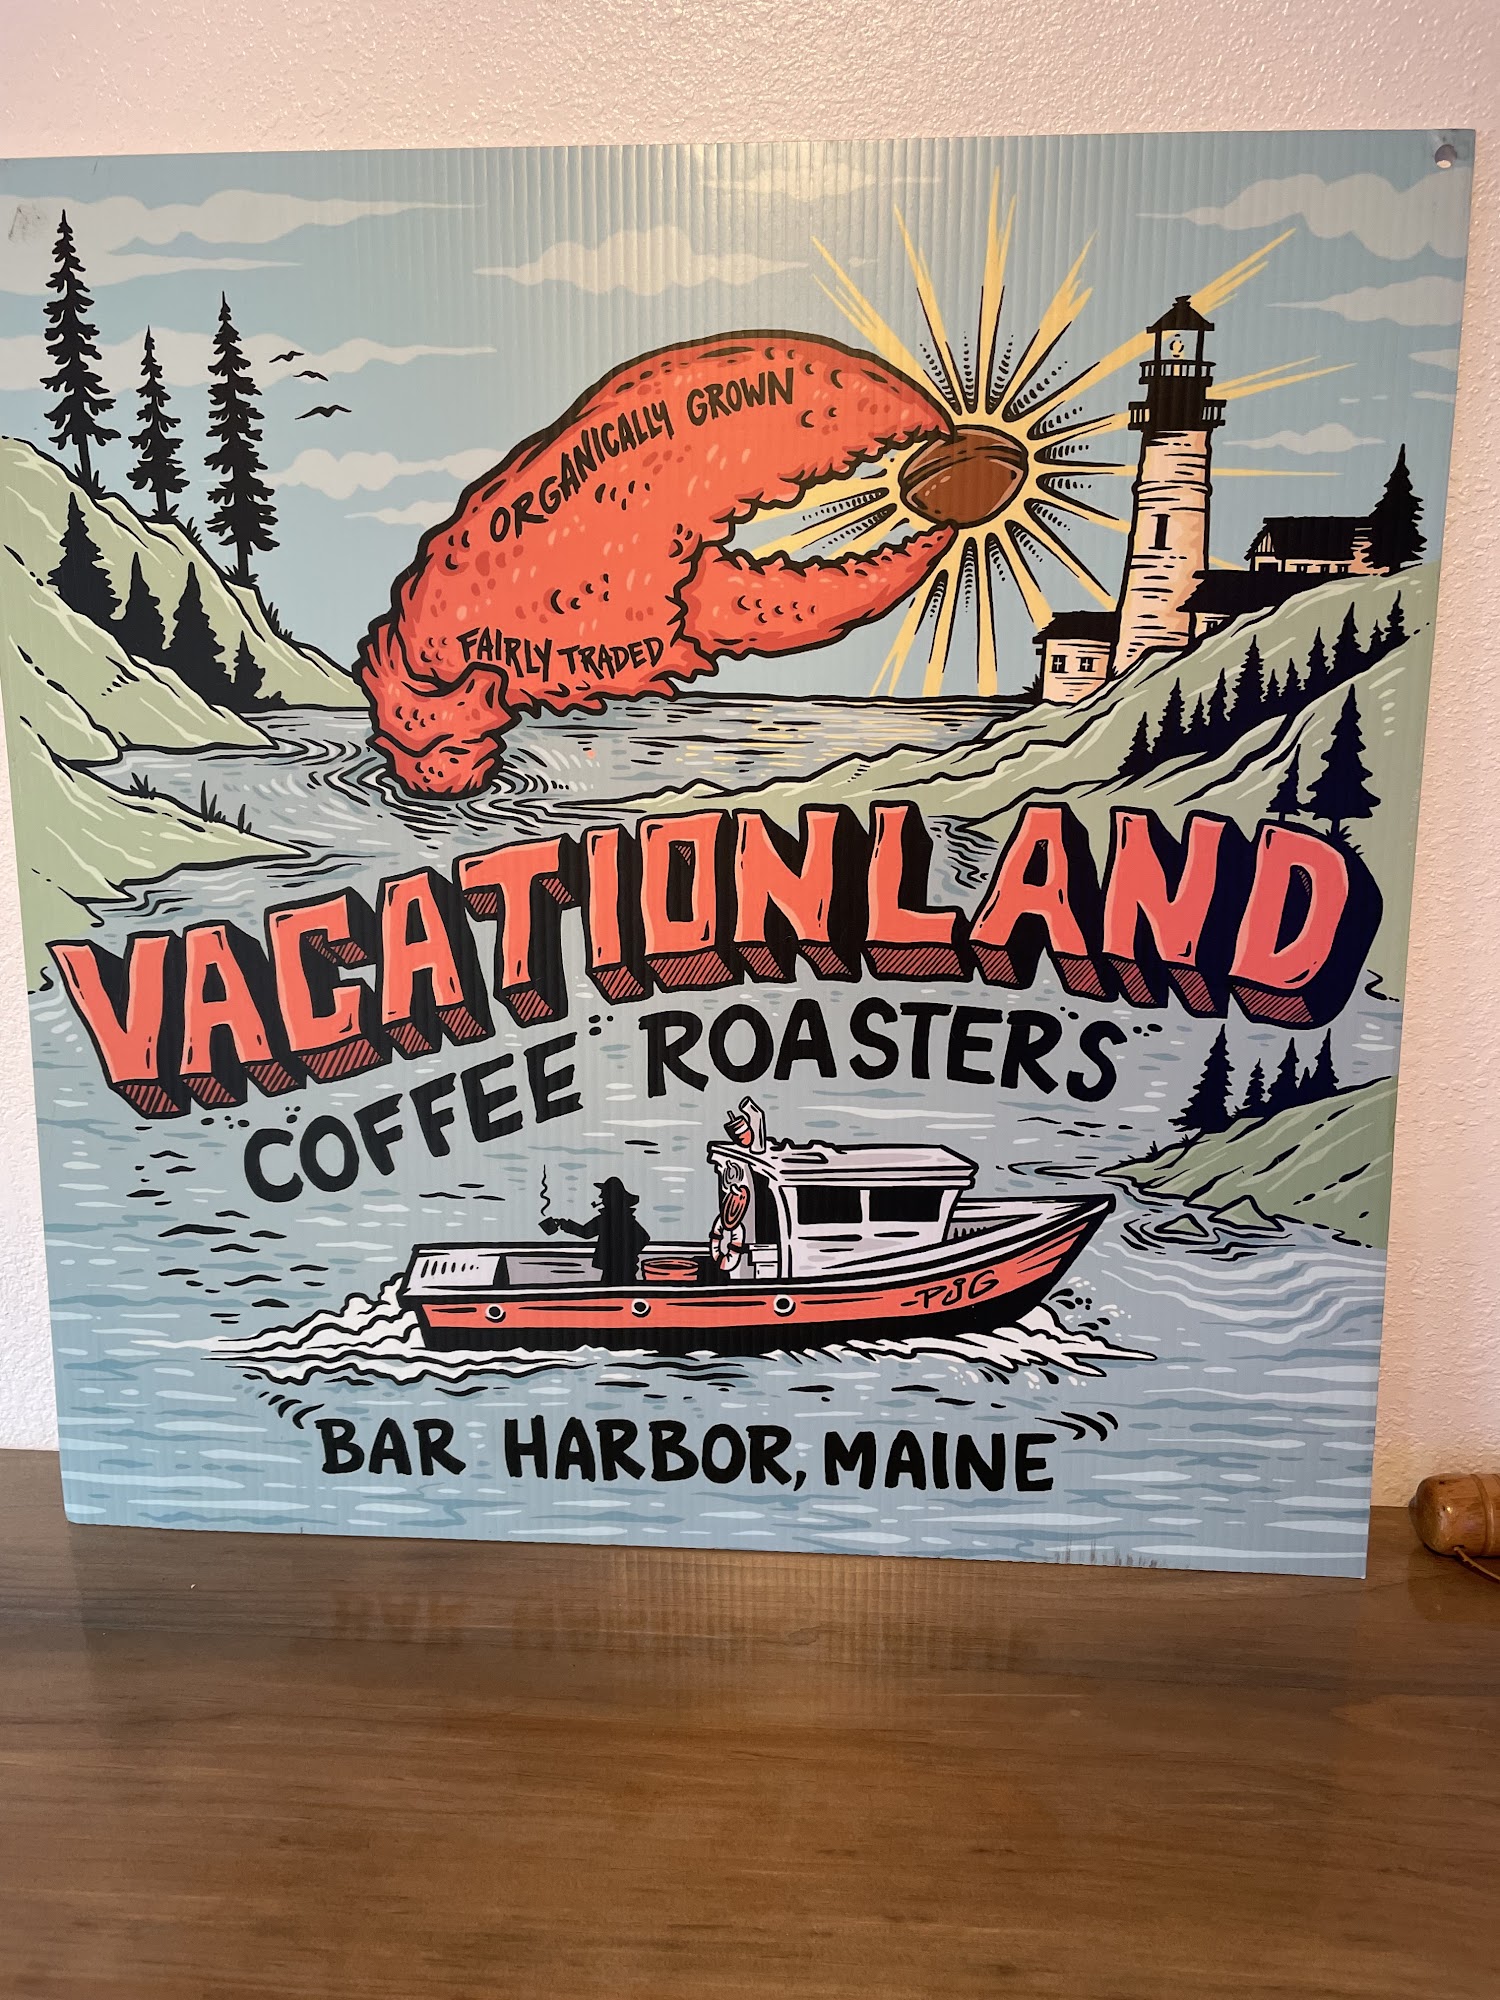 Vacationland Coffee Roasters "Coffee PUB" 30 Rodick St, Bar Harbor, ME 04609